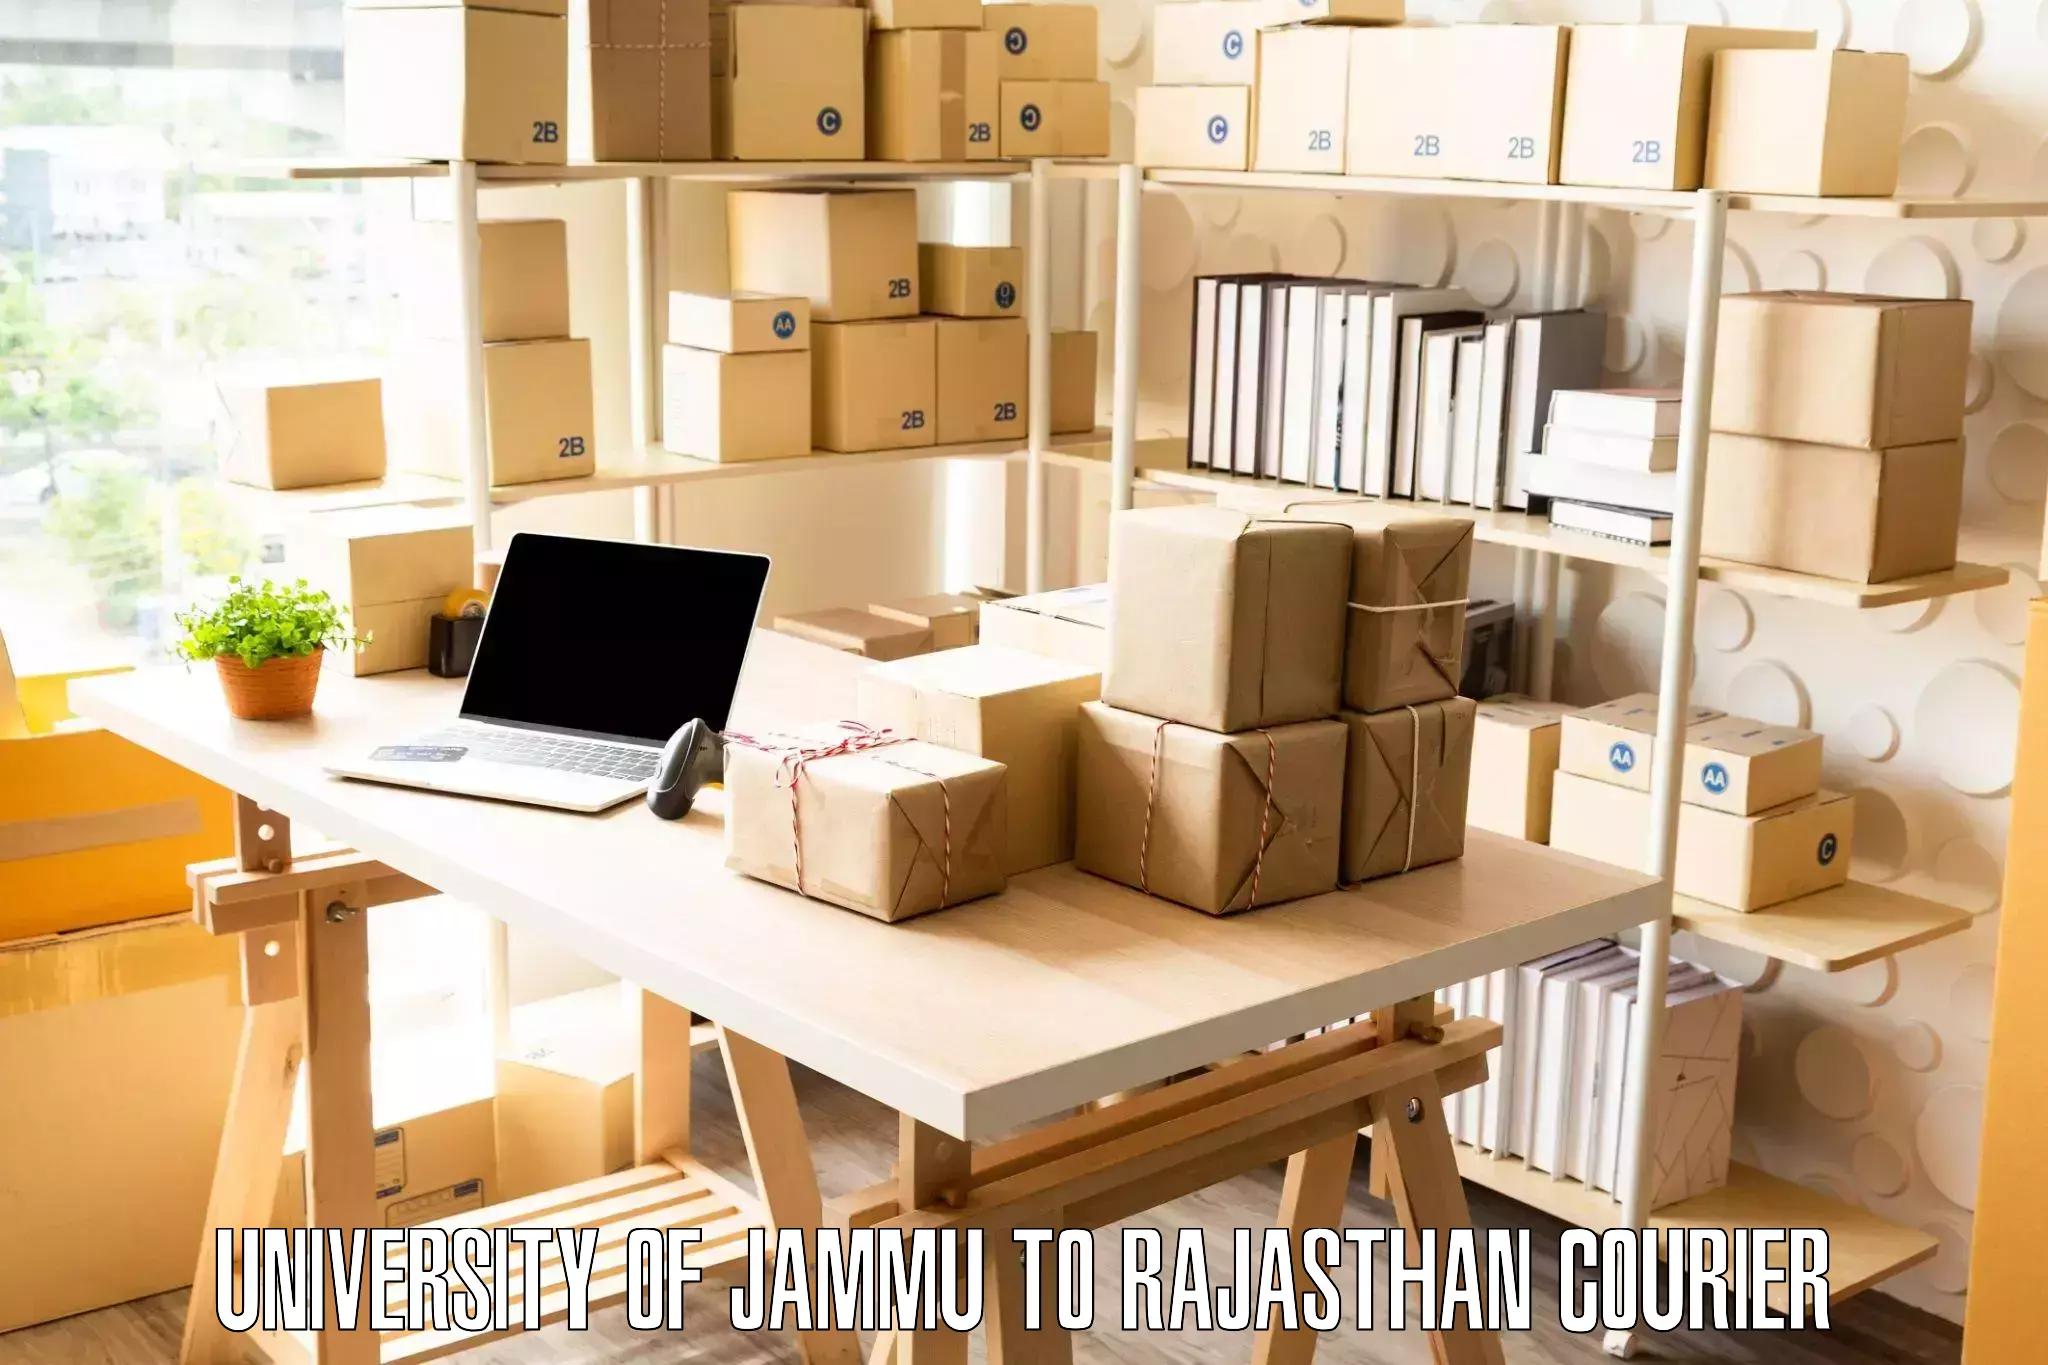 Professional home movers University of Jammu to Neemrana